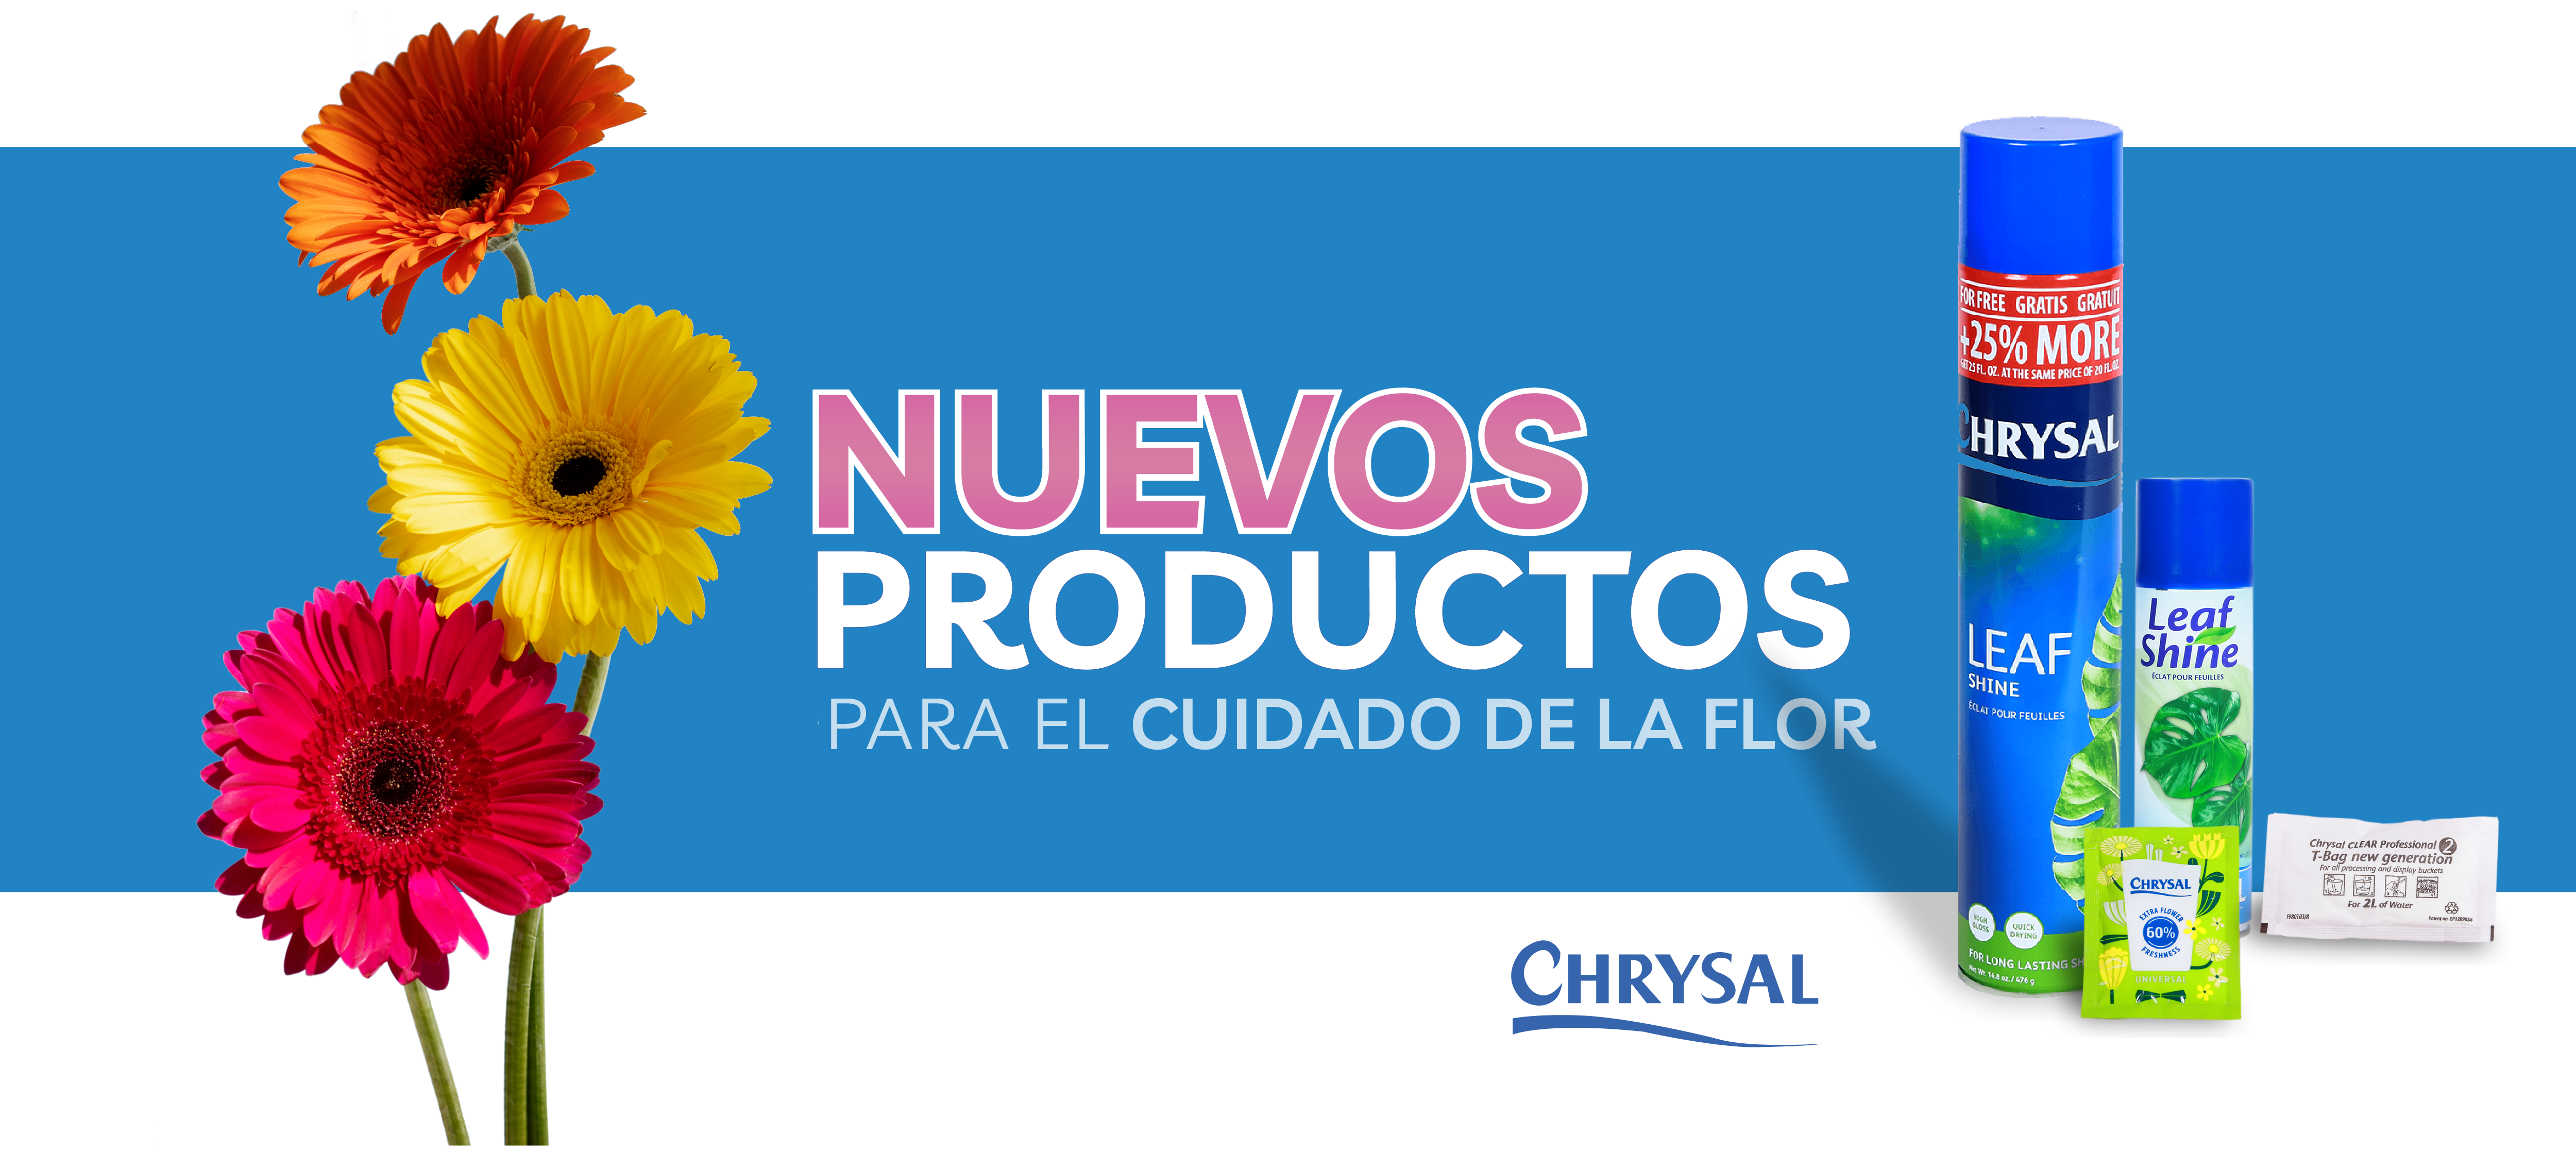 chrysal-nvosproductos-cuidado-flor